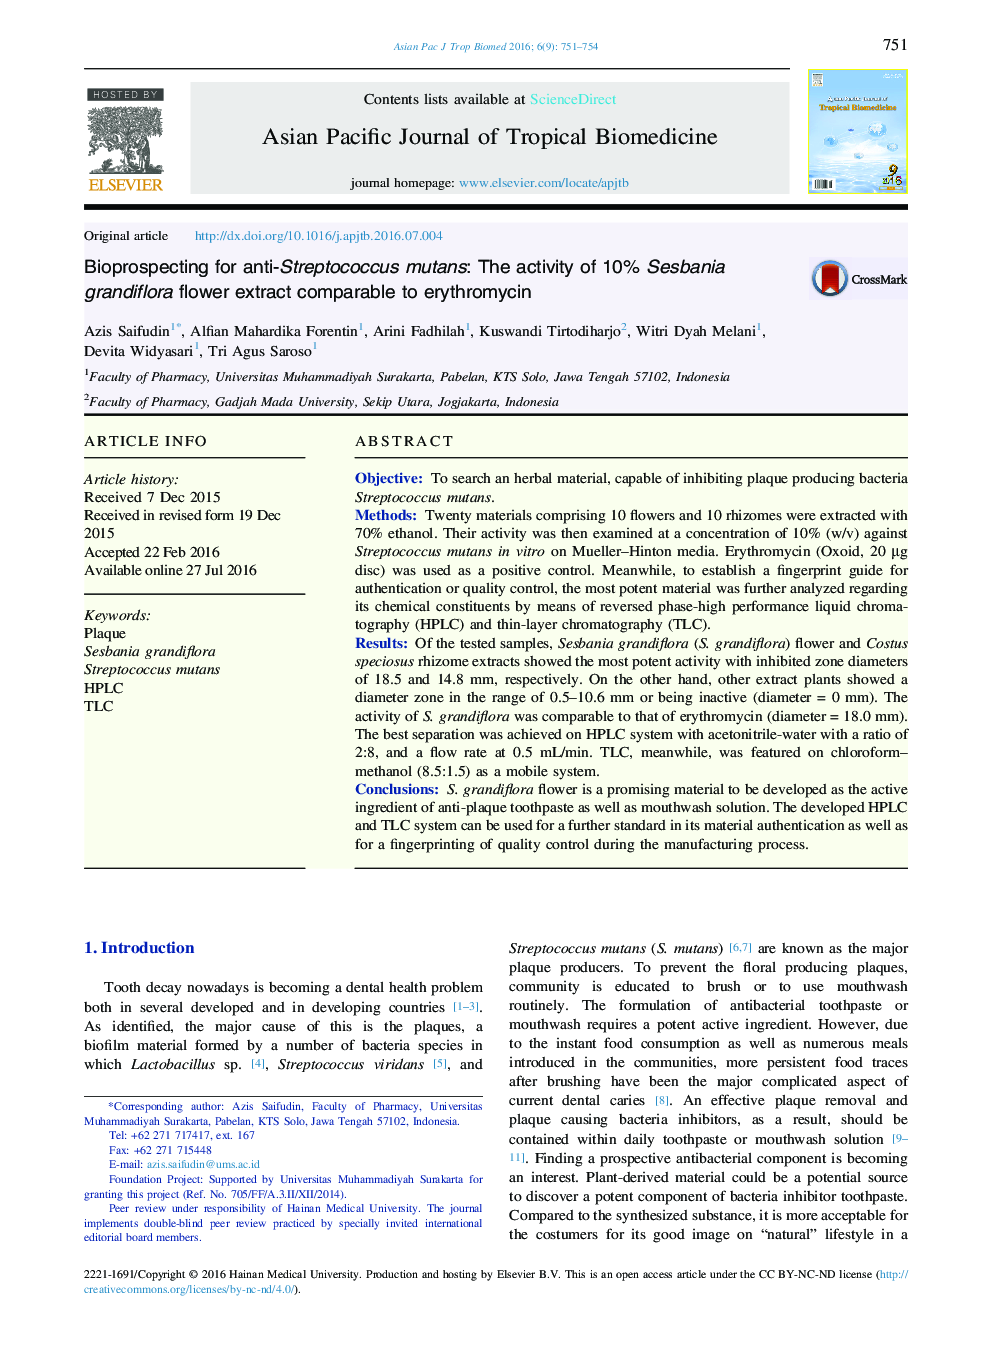 Bioprospecting برای ضد Streptococcus mutans: فعالیت عصاره گل 10٪ Sesbania grandiflora با اریترومایسین